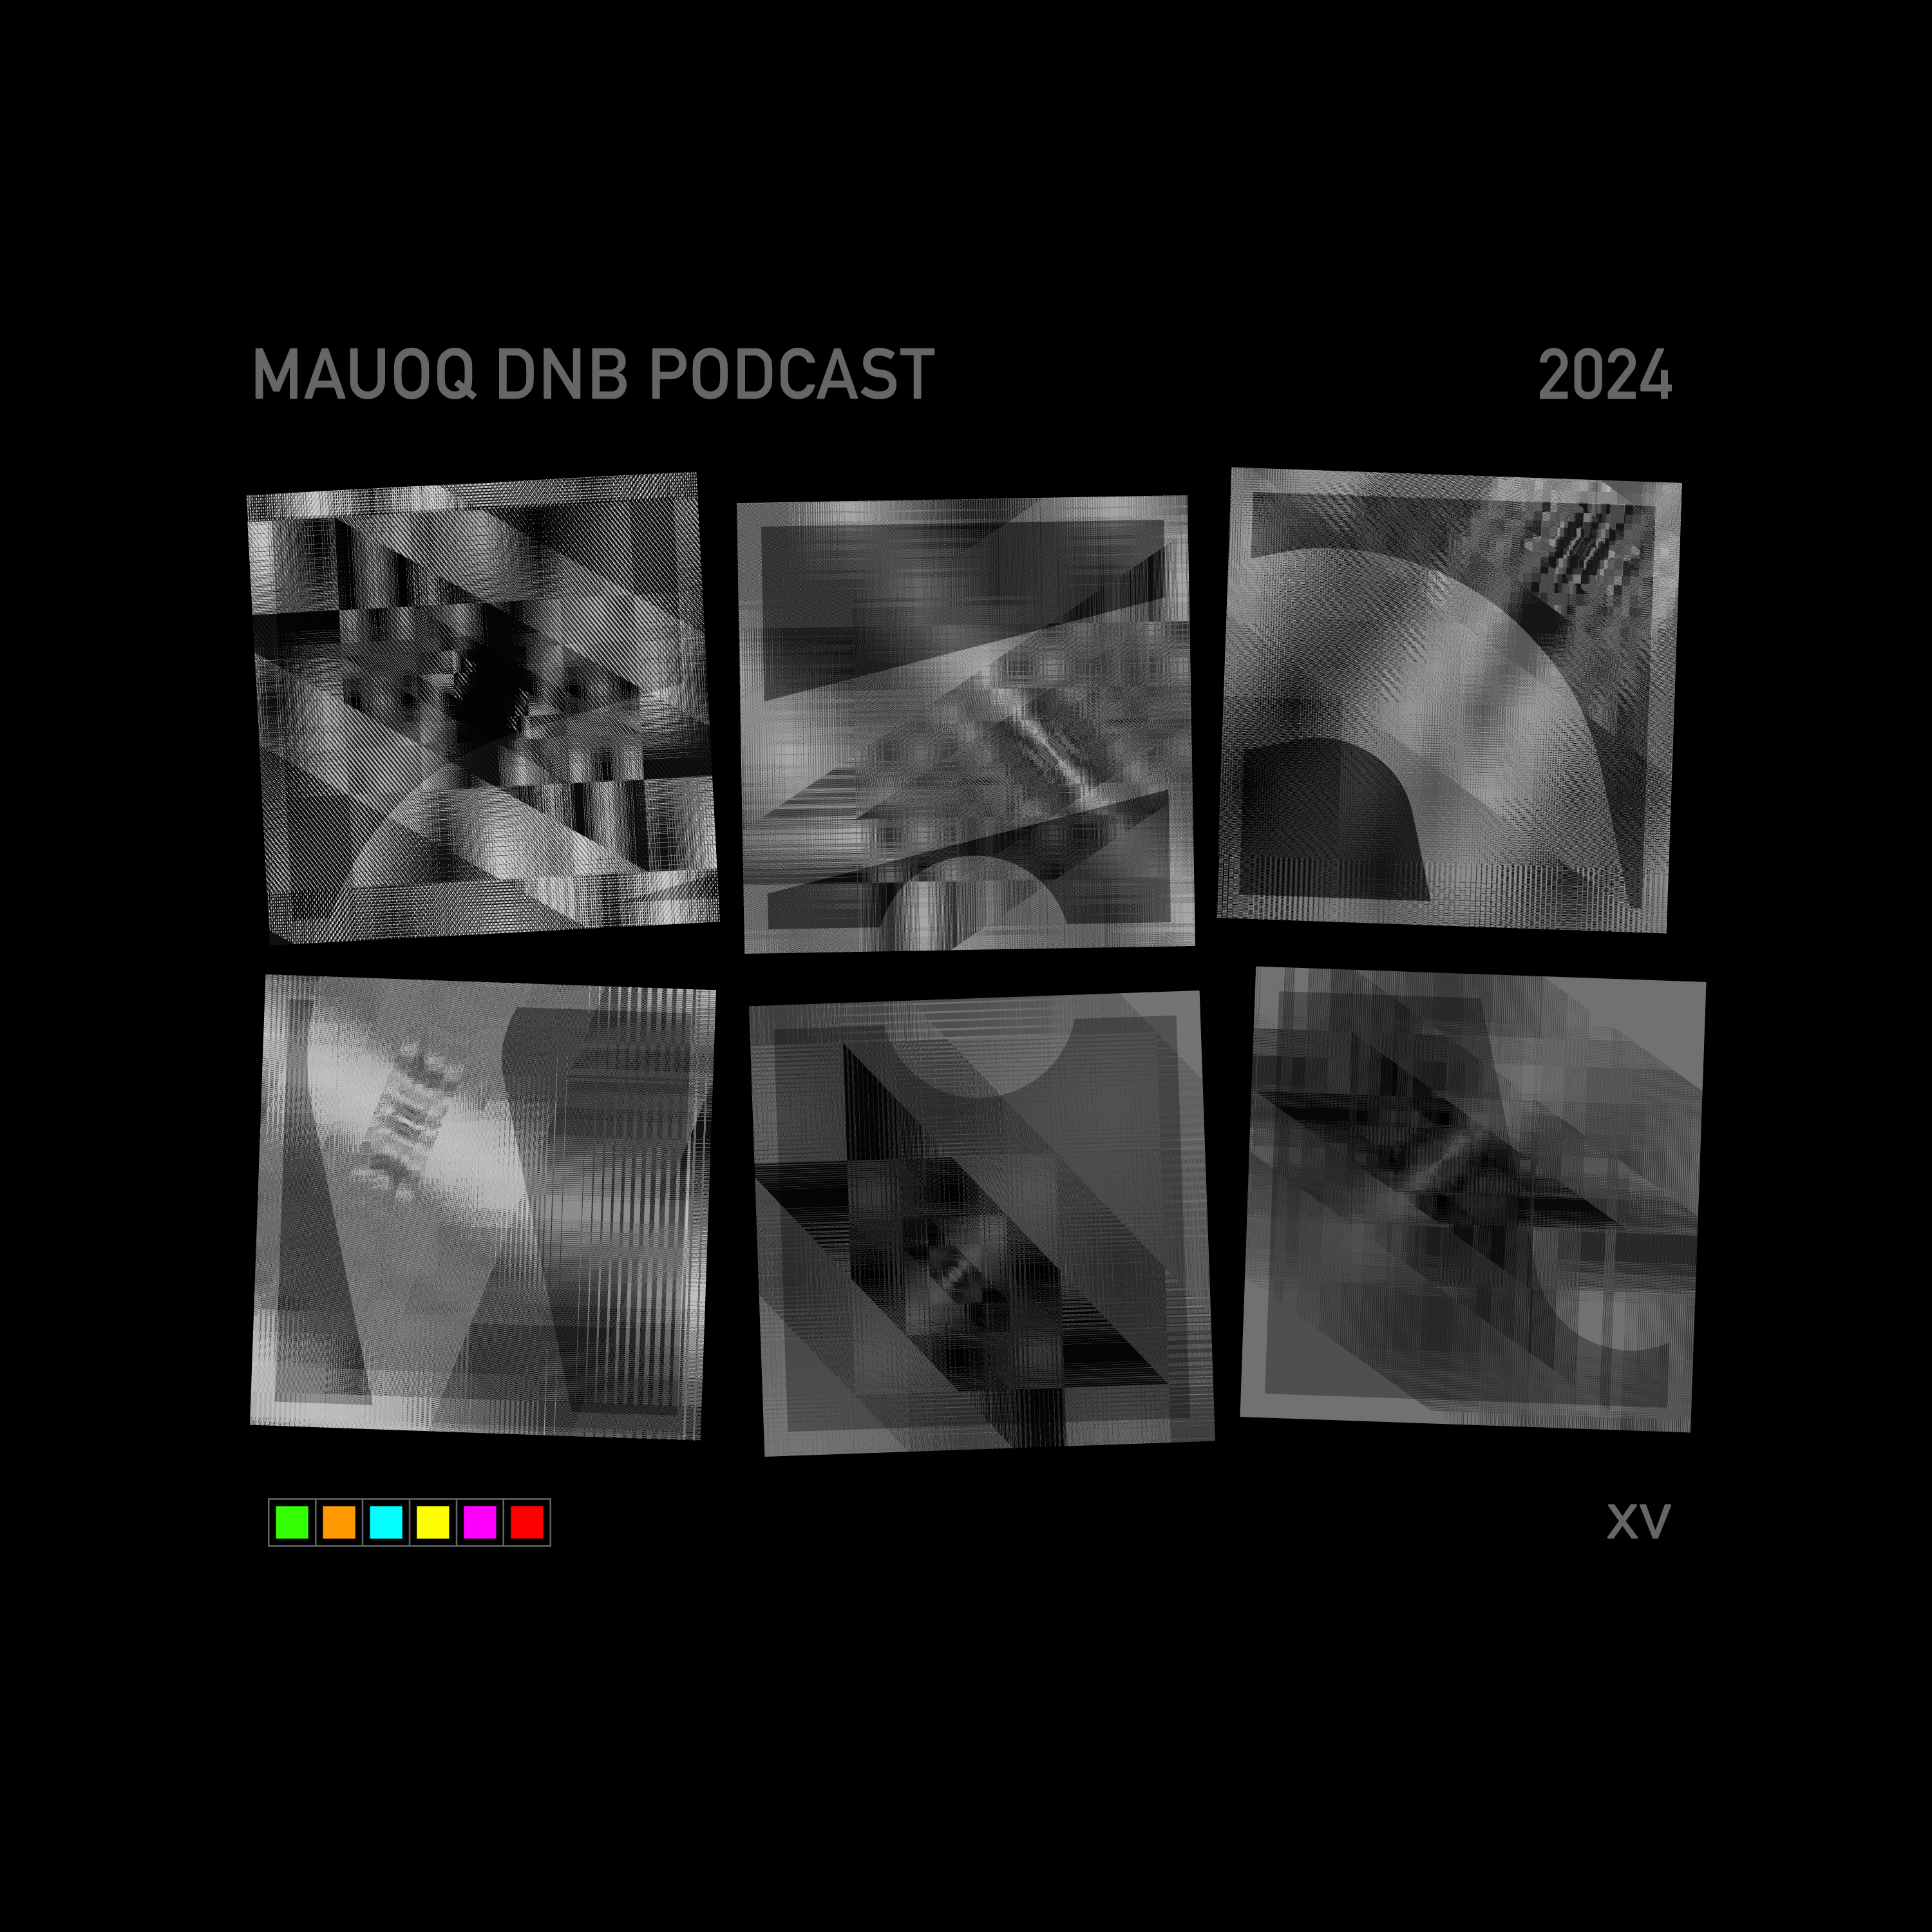 Mauoq DnB Podcast cover art